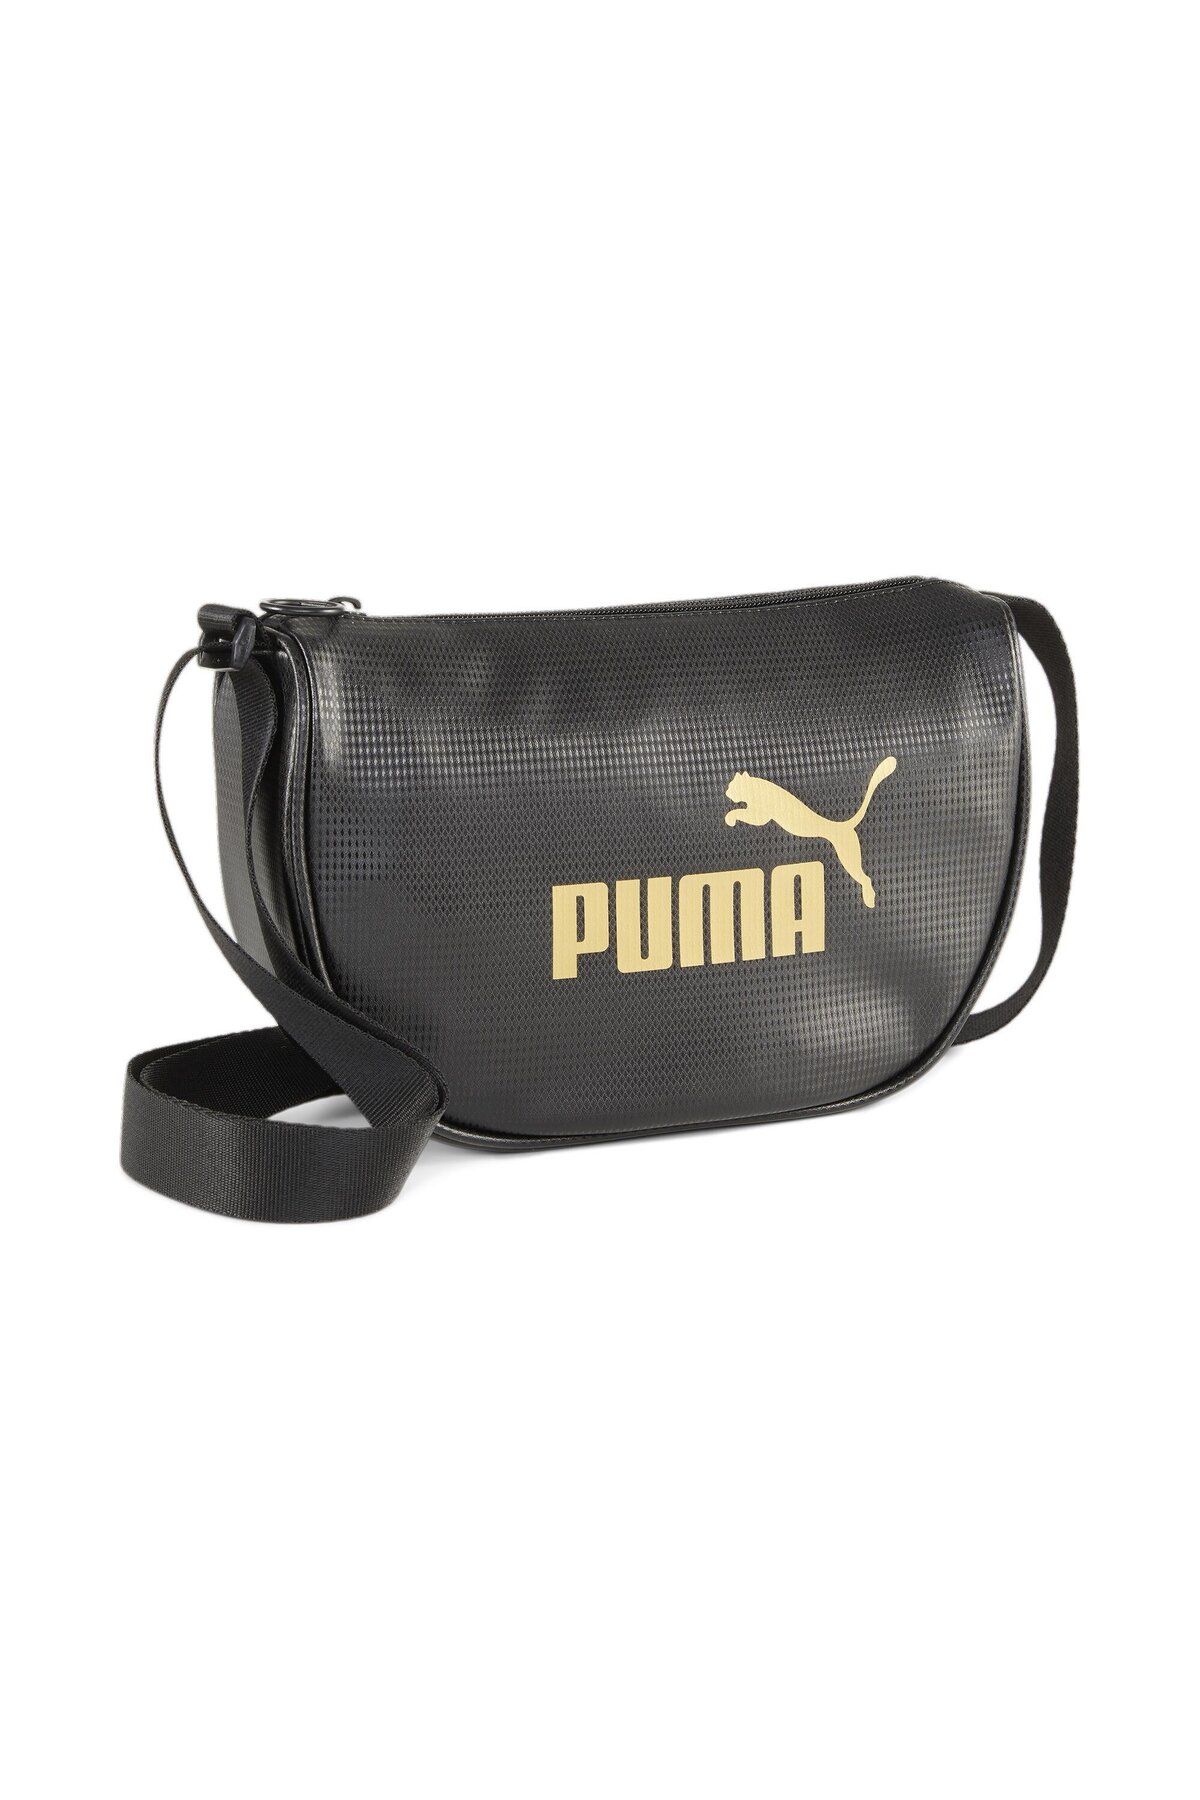 Puma Core Up Half Moon Bag Kadın Omuz Çantası